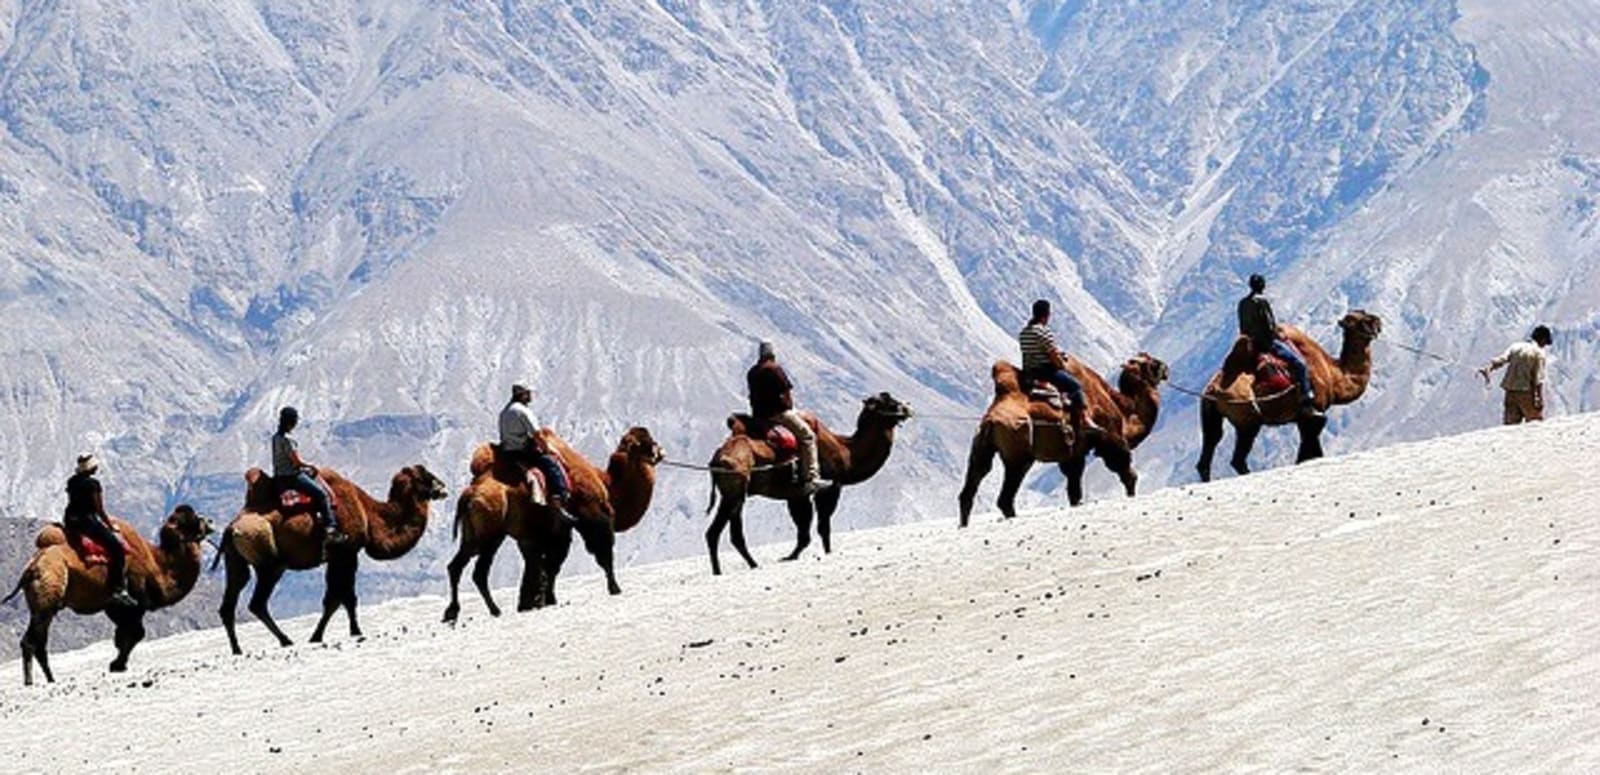 Things to do in Leh Ladakh - Activities to do in Leh Ladakh